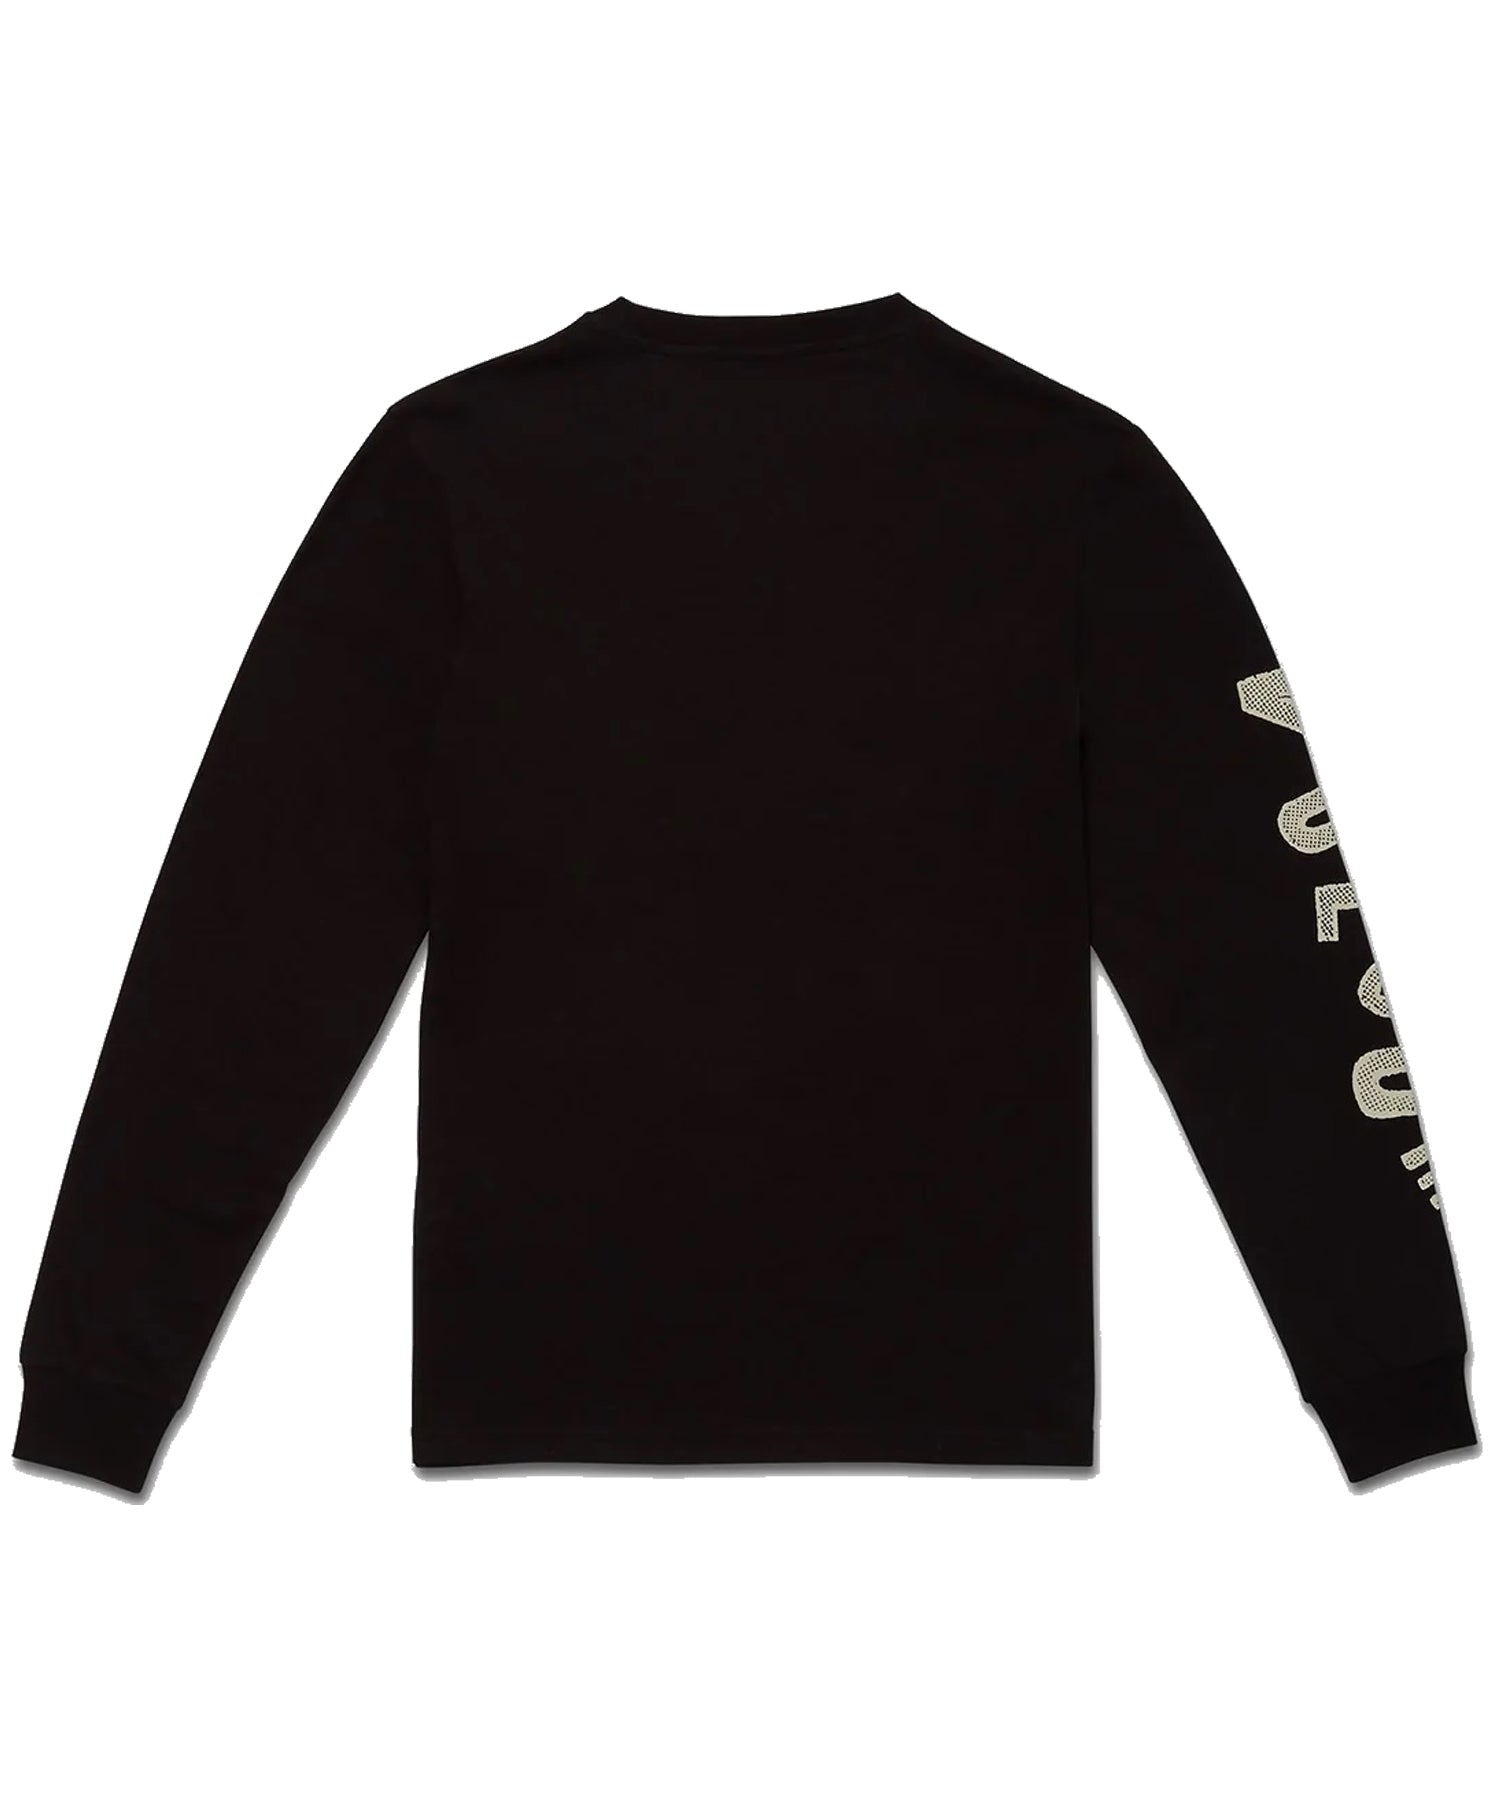 volcom-camiseta-sick-black-Camiseta de manga larga para niños-cuello redondo corte clásico-algodón orgánico-serigrafiado Triple Stone-100%algodón